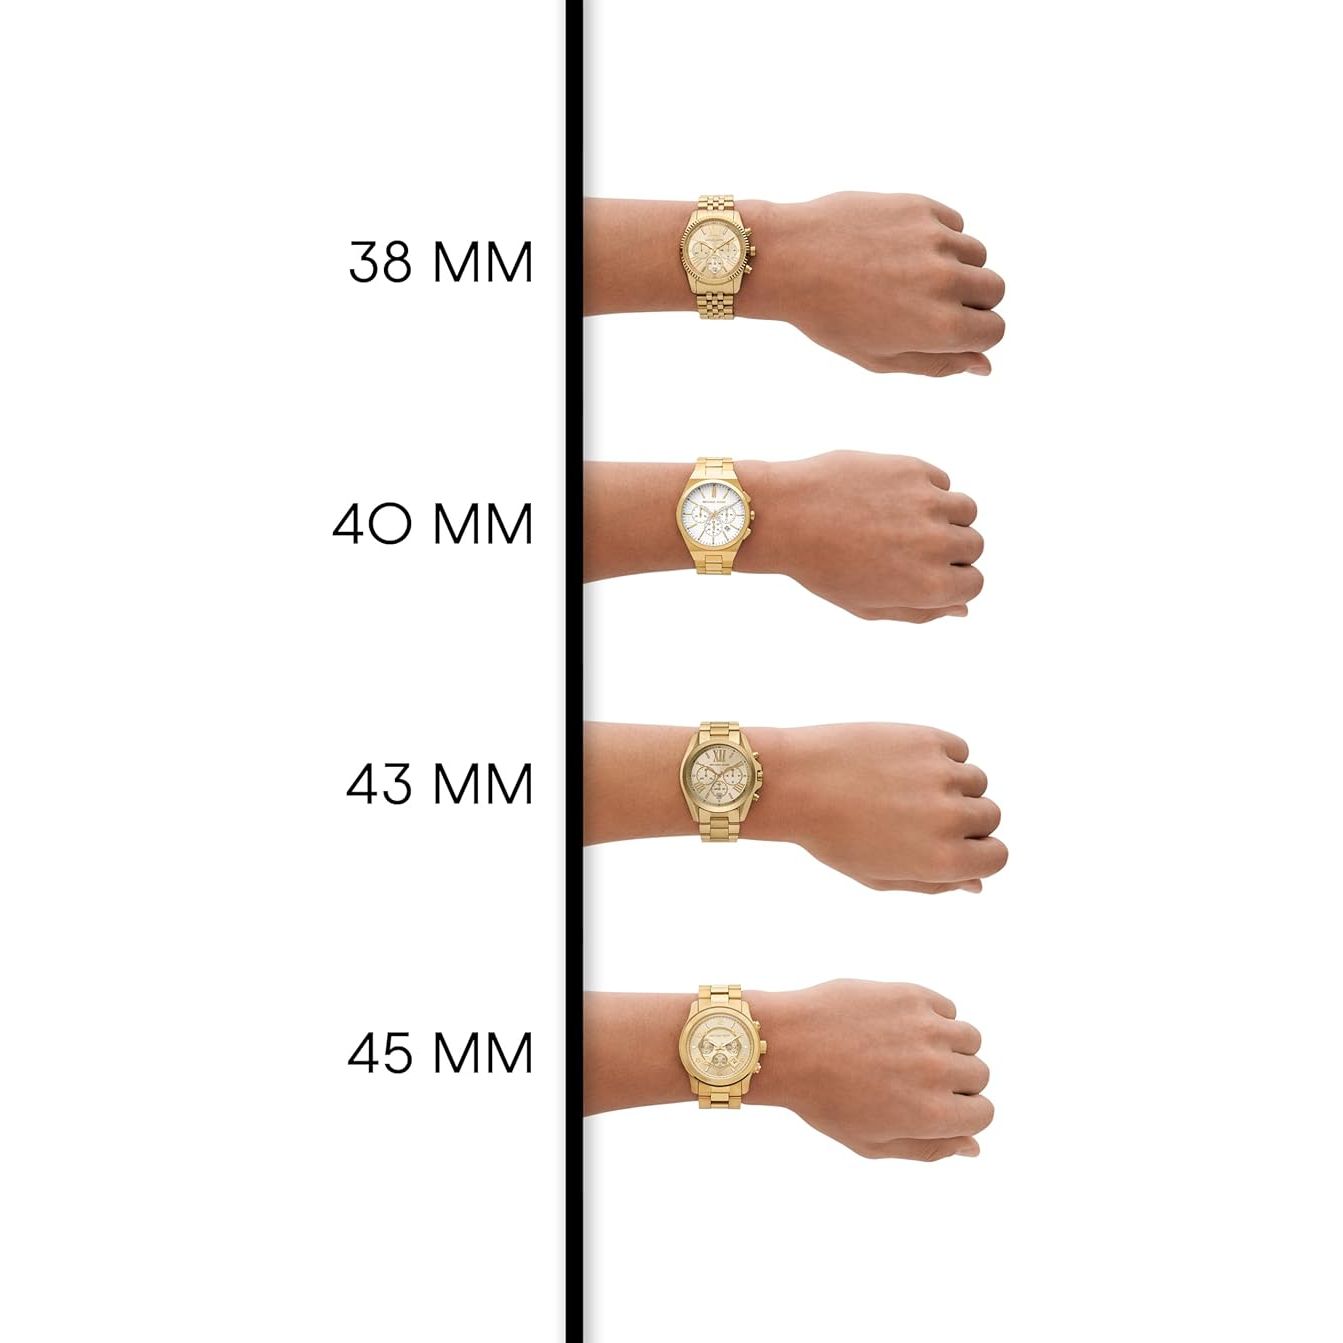 Michael Kors Women's Watch - Slim Runway Two-Tone 42mm (MK3479)